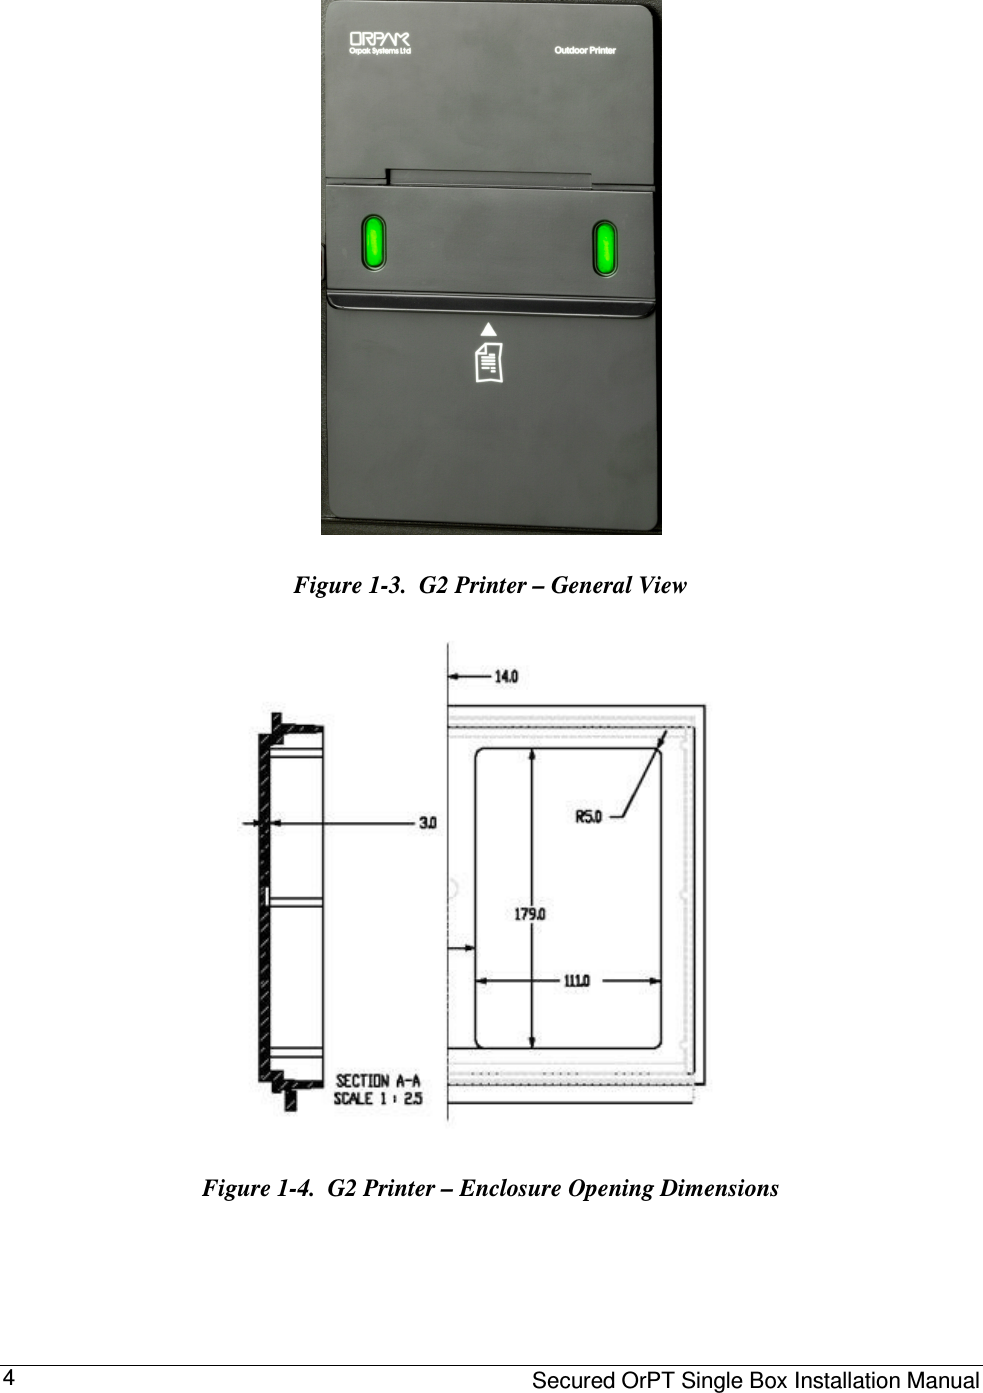     Secured OrPT Single Box Installation Manual 4  Figure  1-3.  G2 Printer – General View  Figure  1-4.  G2 Printer – Enclosure Opening Dimensions  